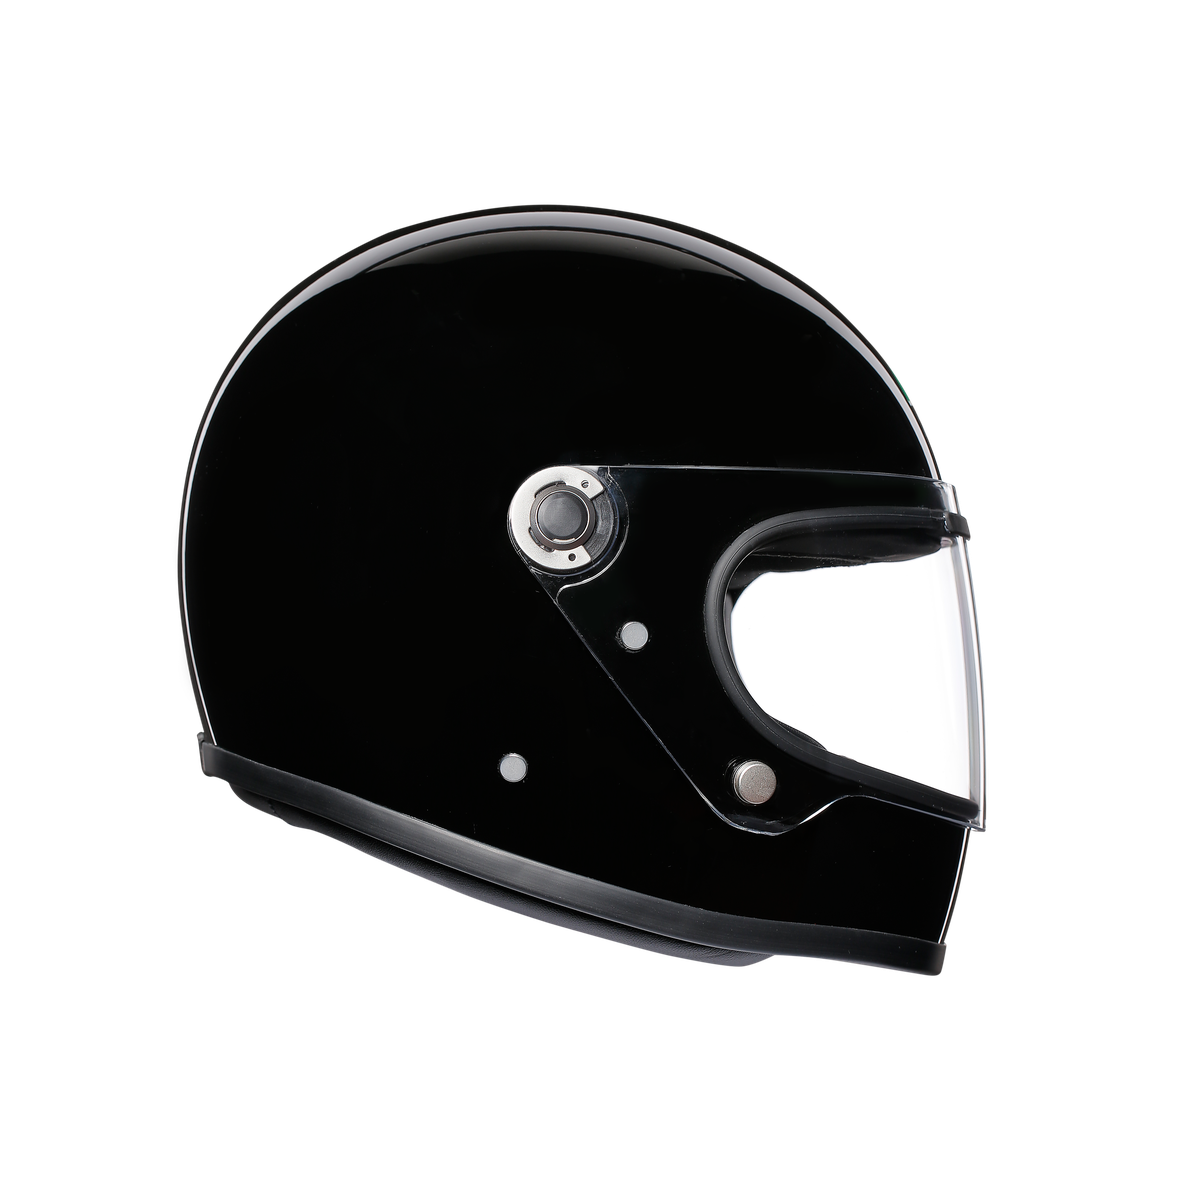 Motorcycle Helmet Legends Agv X3000 Solid Ece2205 Black Dainese Official Shop